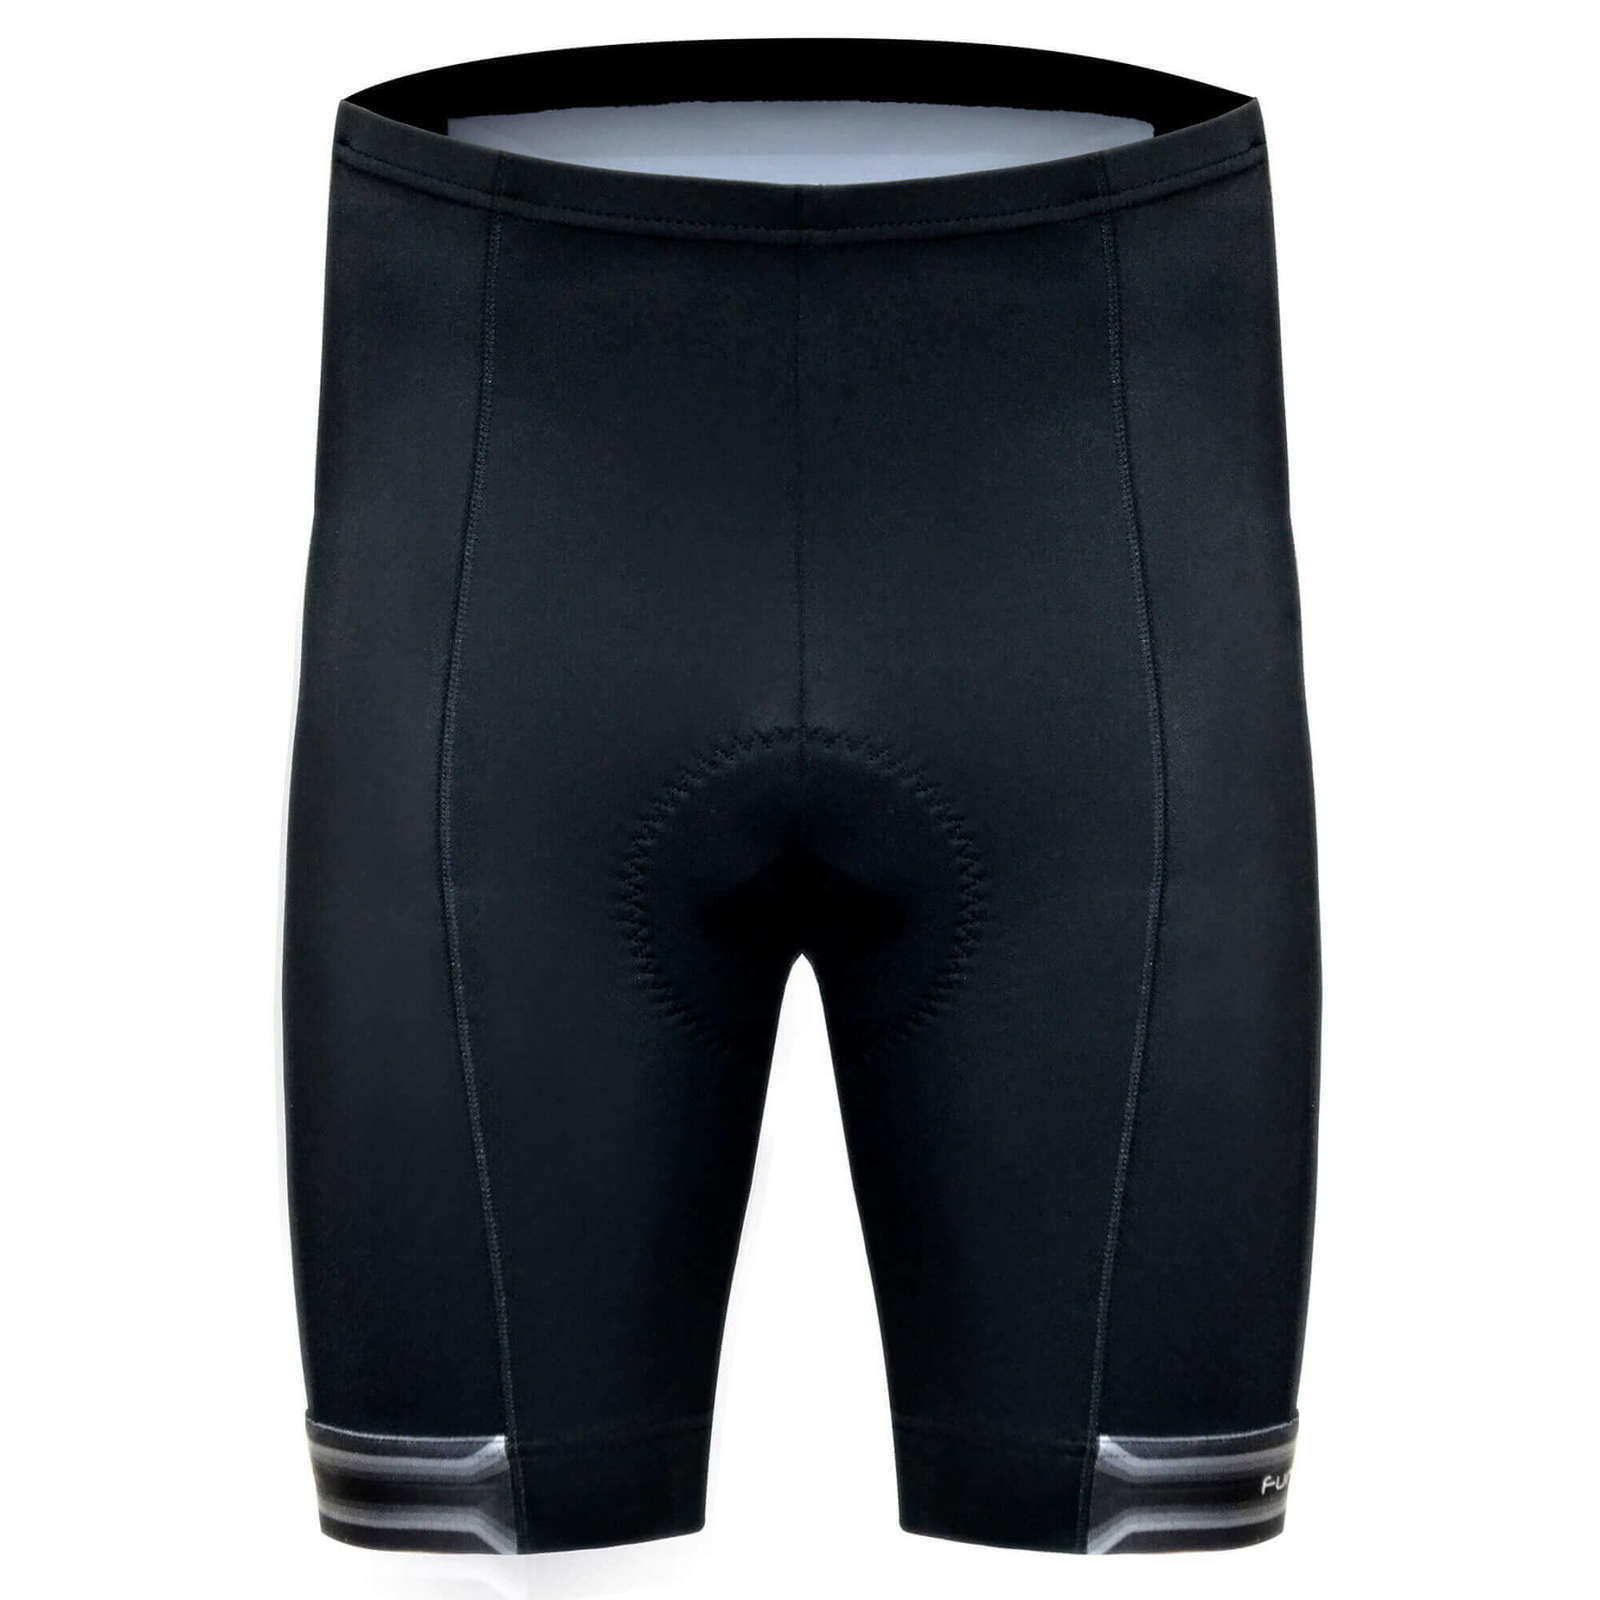 Cycling Short and pants Funkier Venezia Pad C1 Black M Cycling Short and pants